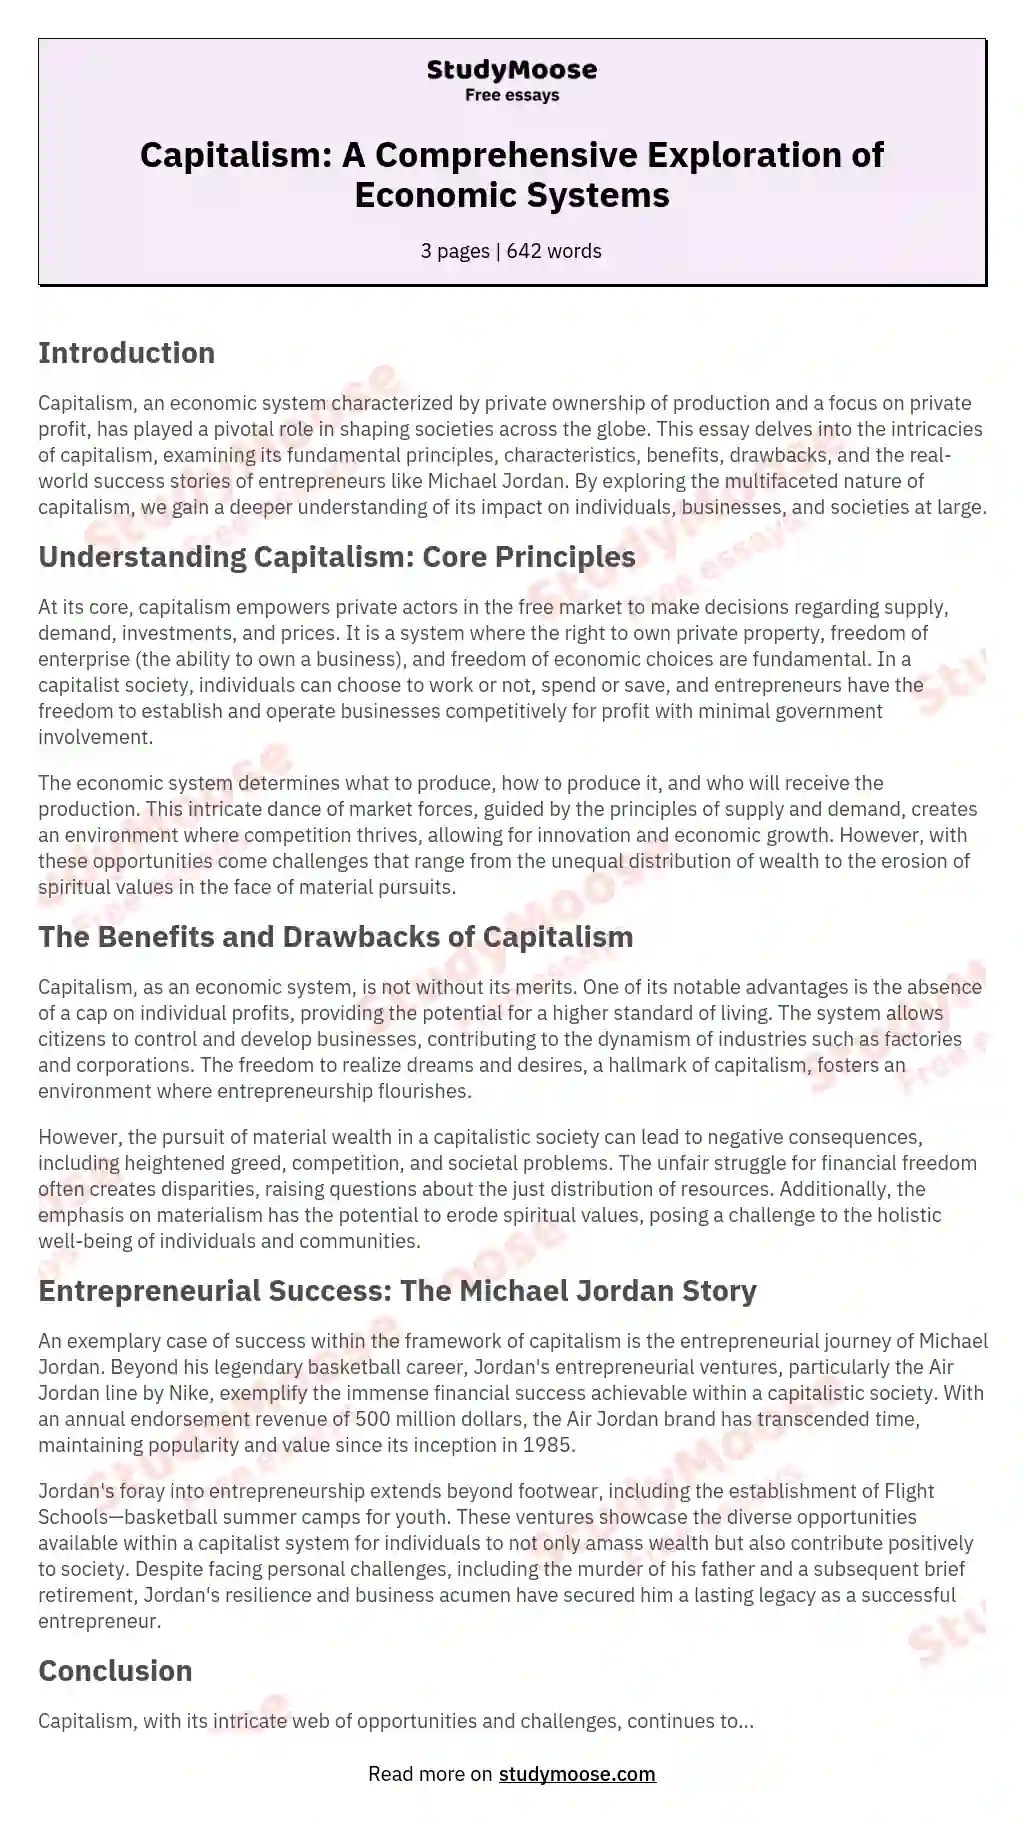 Capitalism: A Comprehensive Exploration of Economic Systems essay